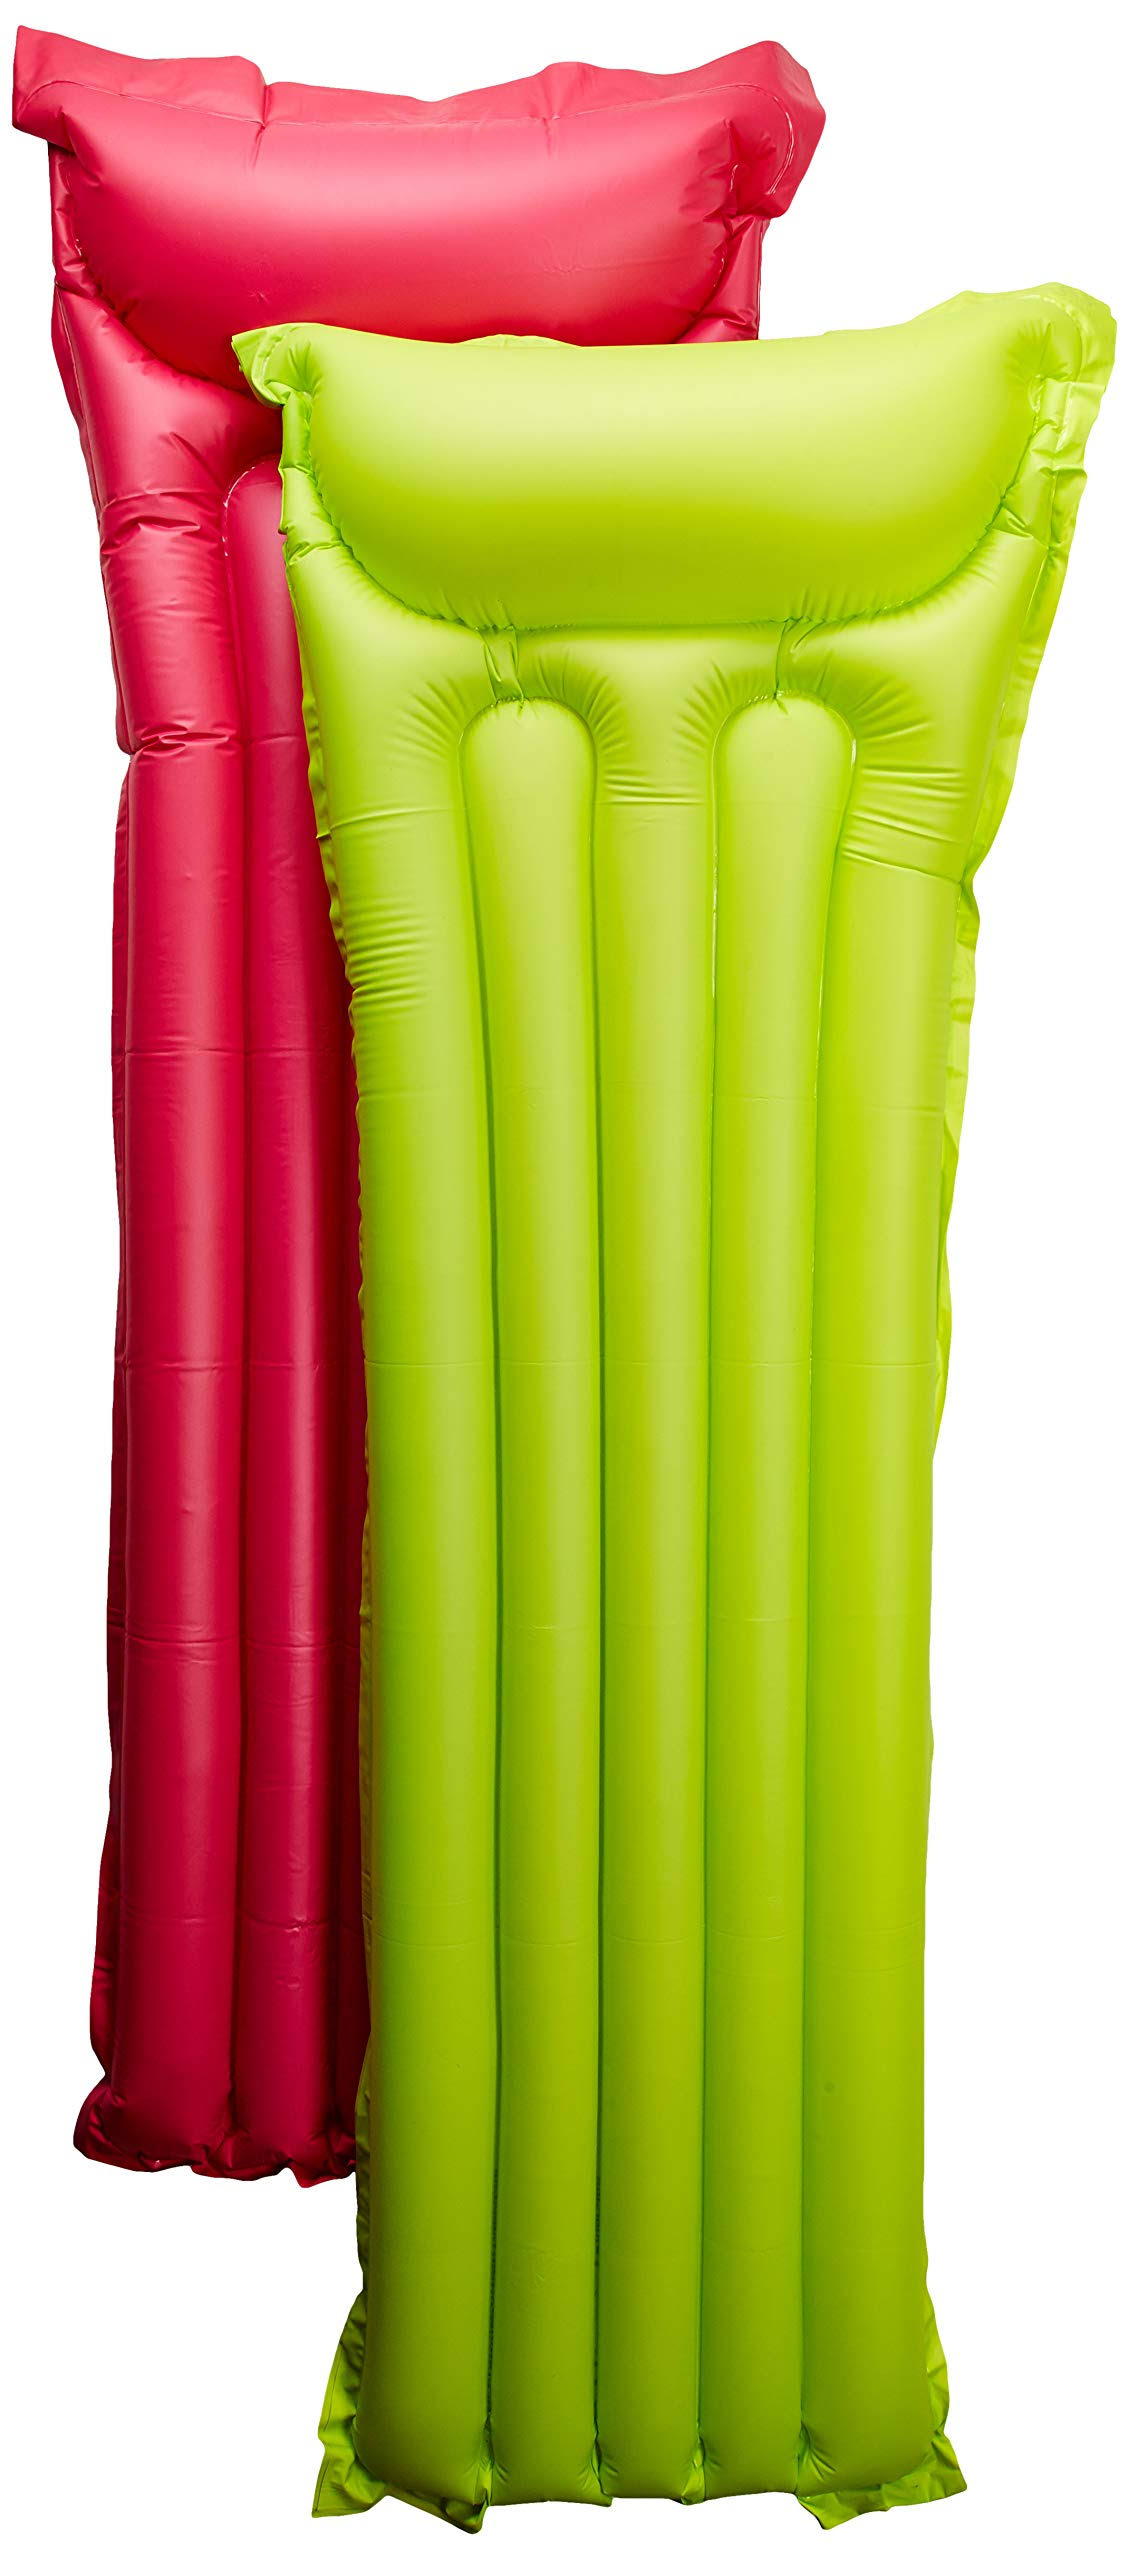 Intex Inflatable Floating Mat - Assorted Colors, 72" x 27"